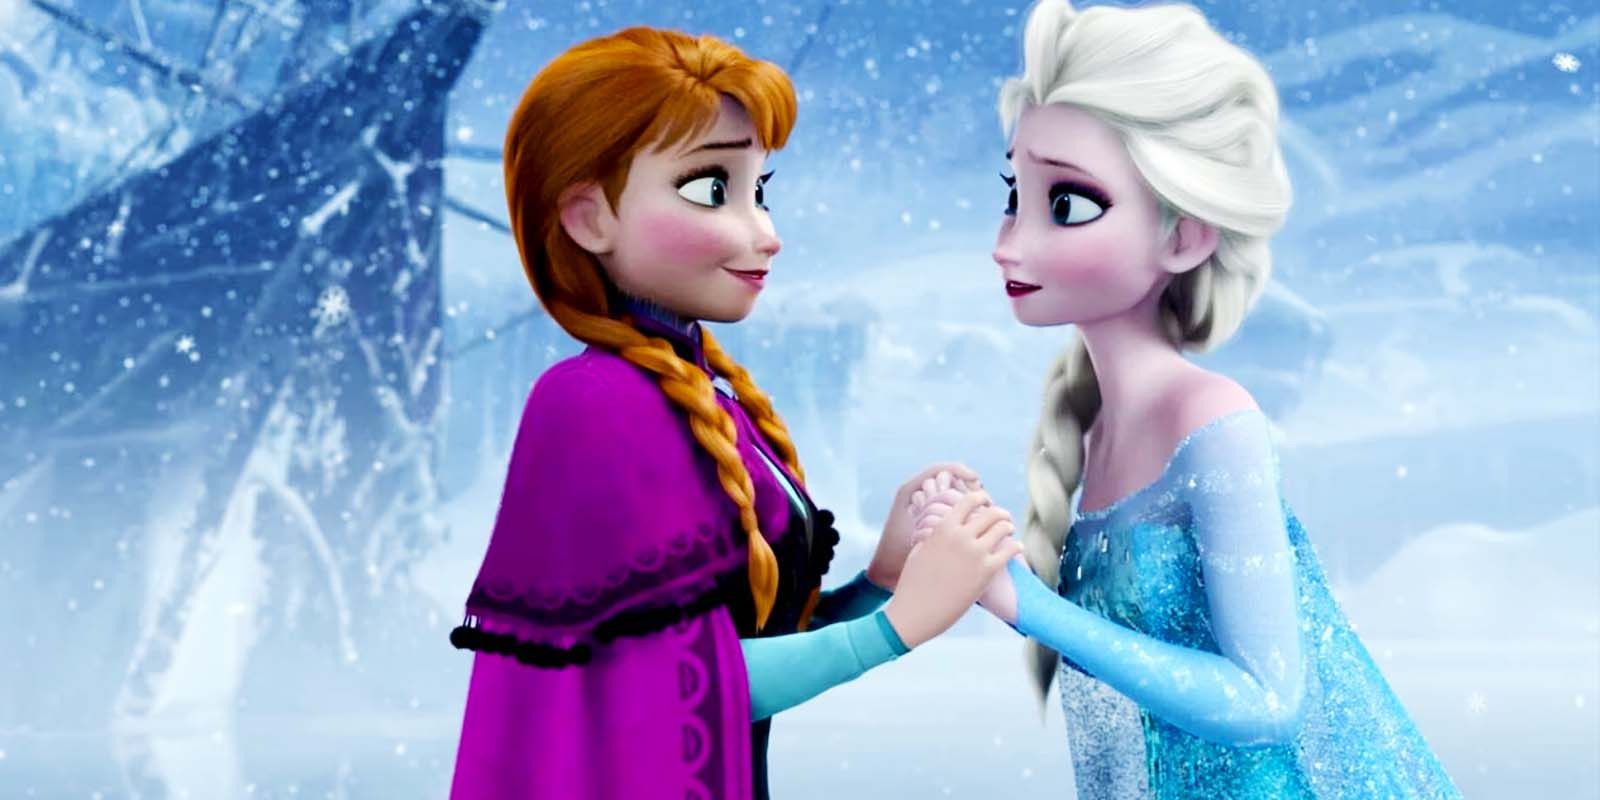 “I Am Blown Away”: Kemajuan Frozen 3 Mendapat Pembaruan Menarik dari Bos Animasi Disney